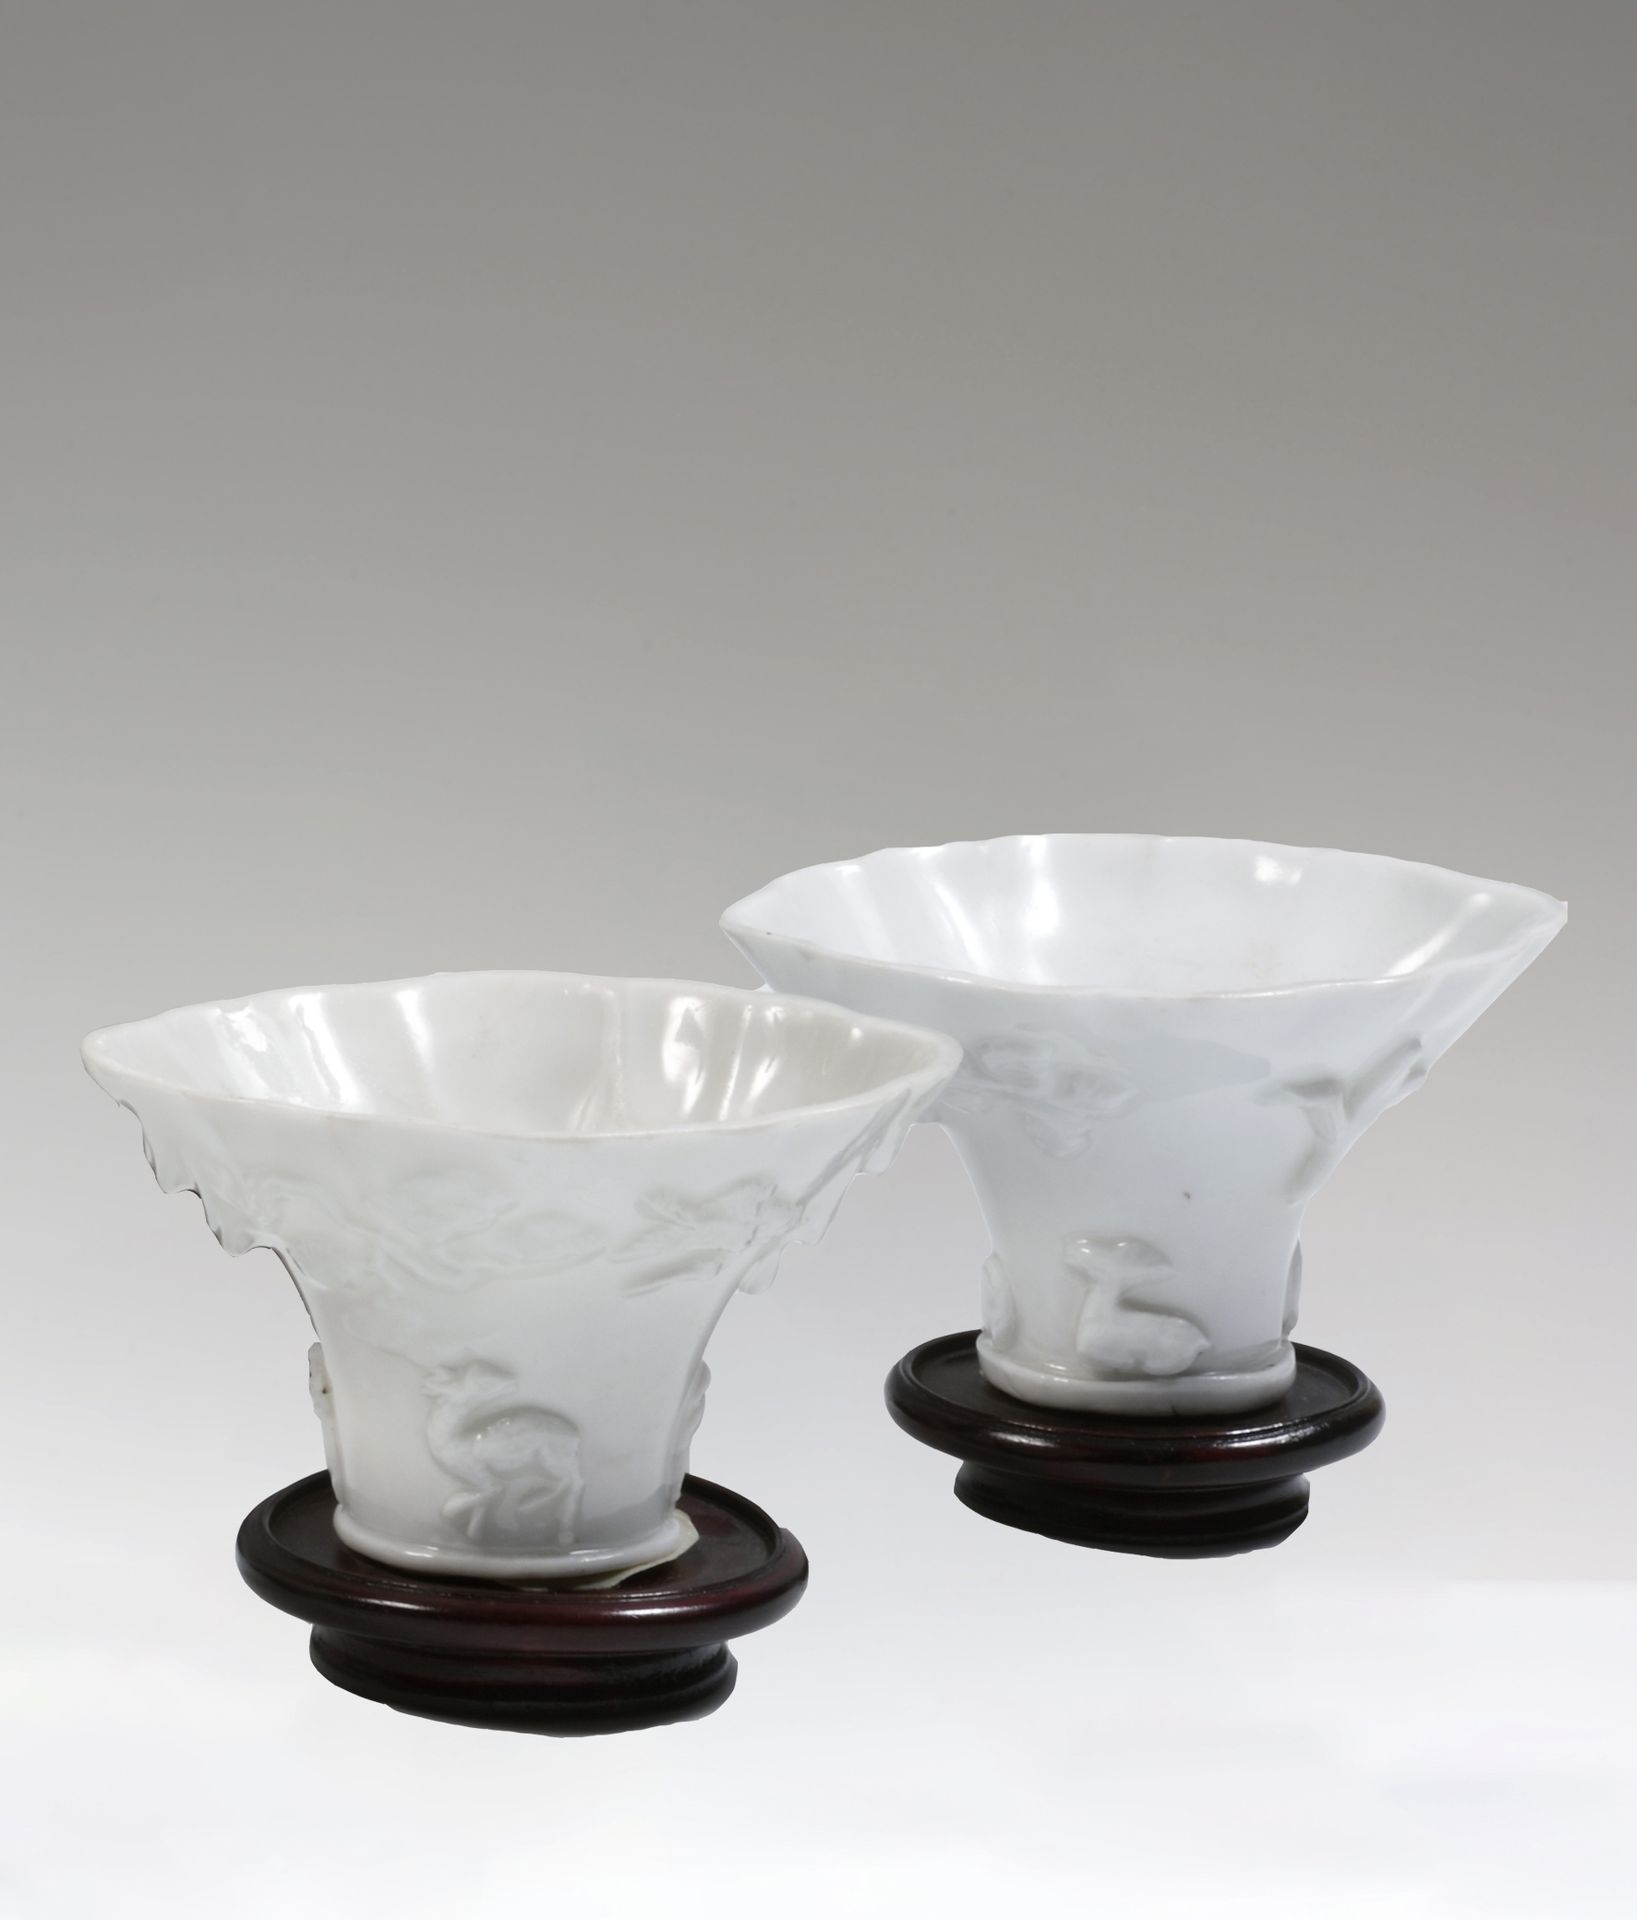 Null 
中国

两只角形白瓷酒杯，浮雕装饰有嵌合体、鹿、梅花、云和岩石。

康熙时期（1662-1722）。

H.6厘米，长10厘米。